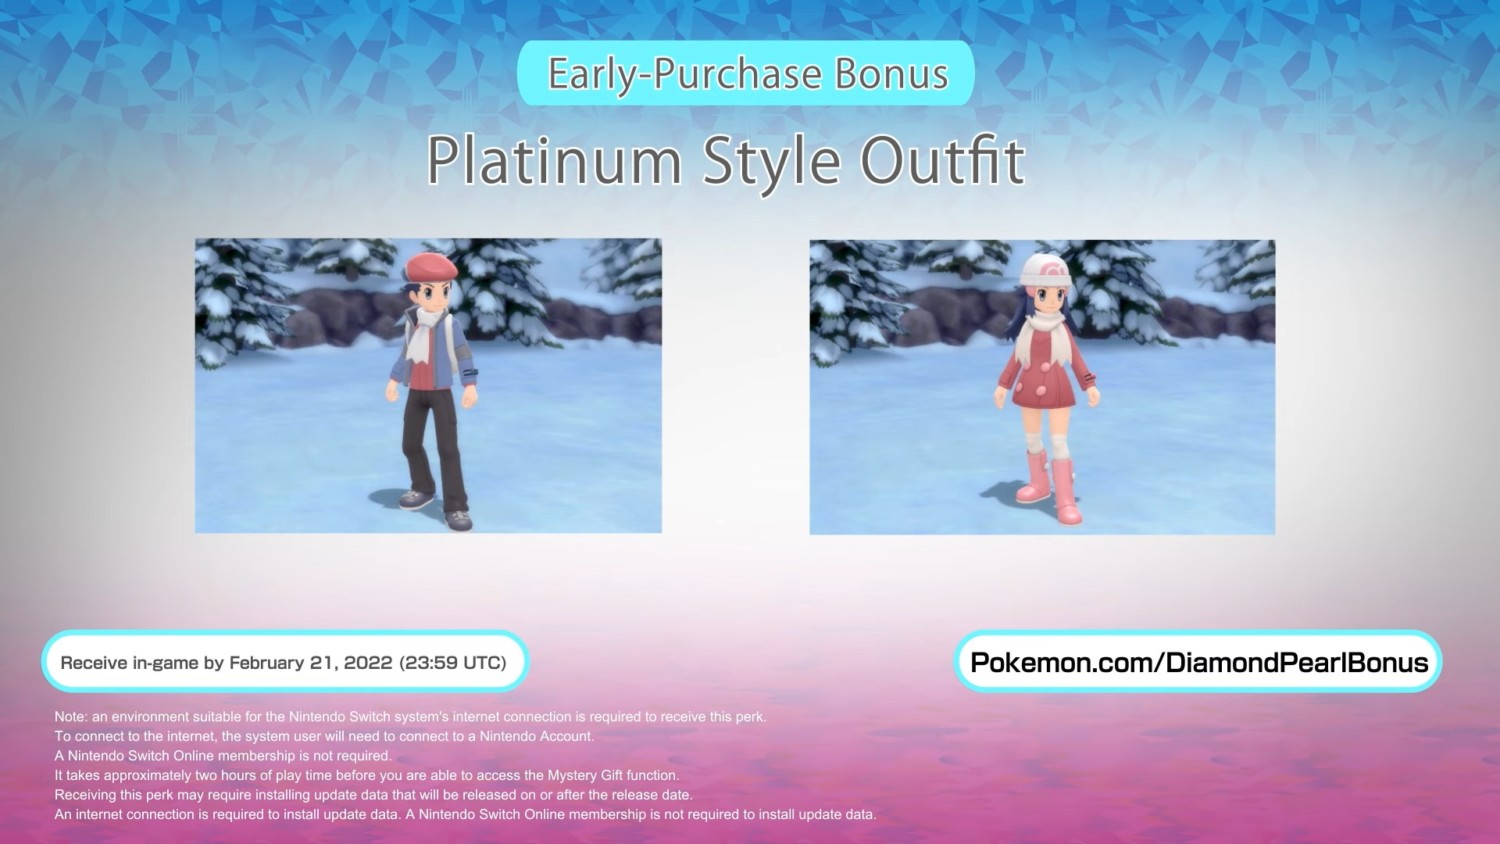 New Pokémon Brilliant Diamond, Shining Pearl Video Showcases Team Galactic,  Legendary Lake Trio, And Early-Purchase Rewards - Game Informer